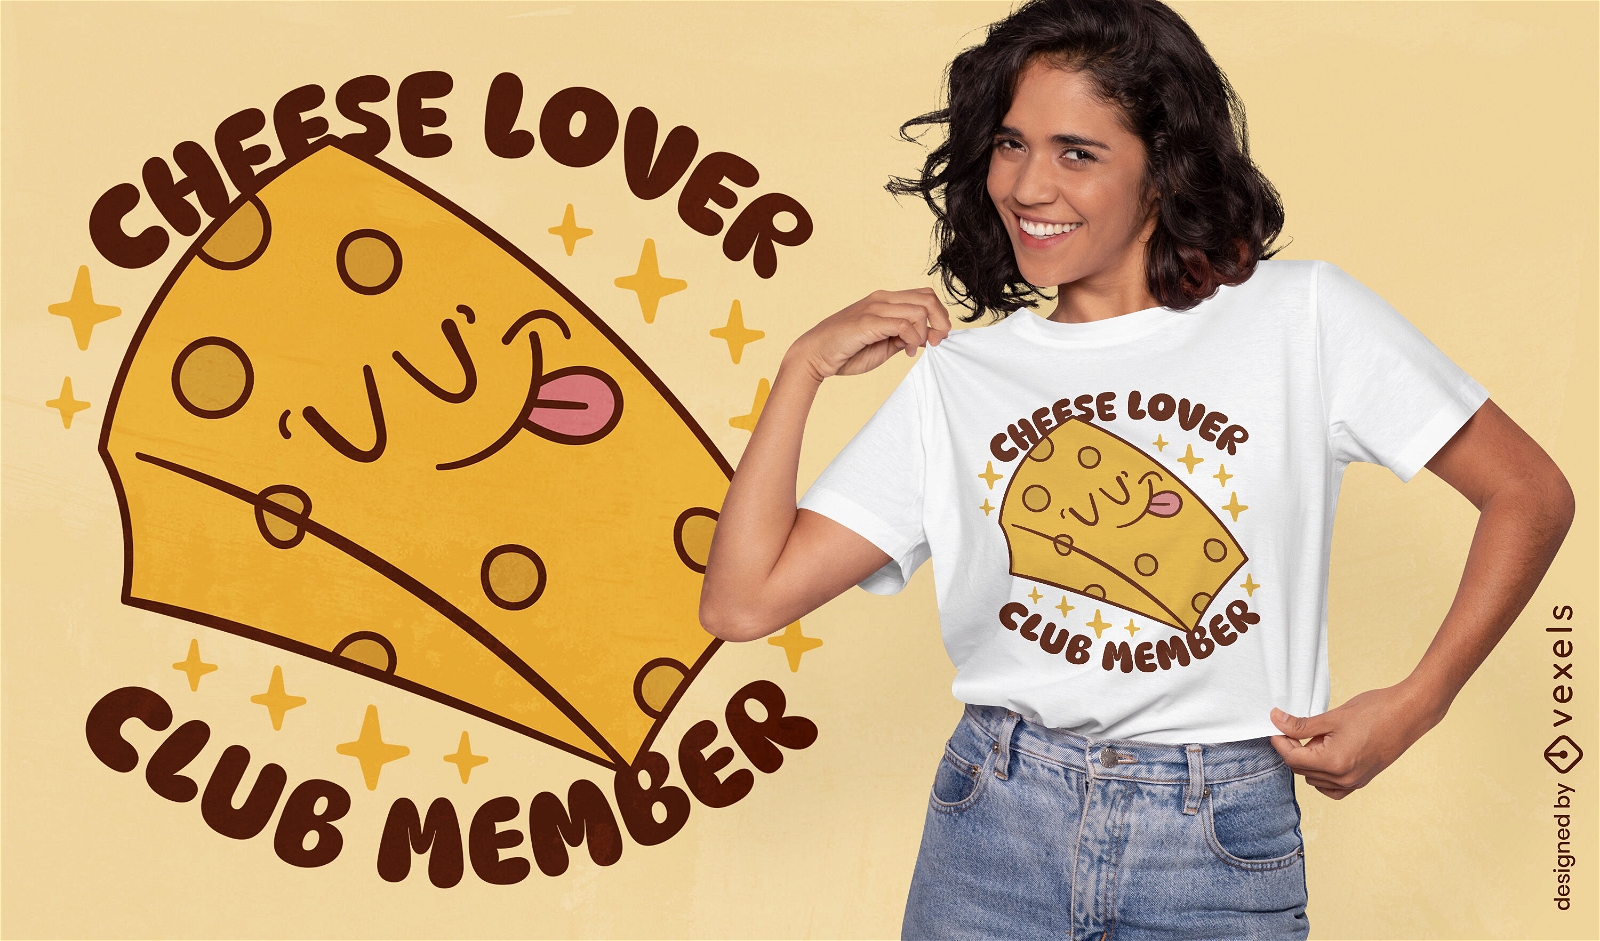 Cheese club member t-shirt design